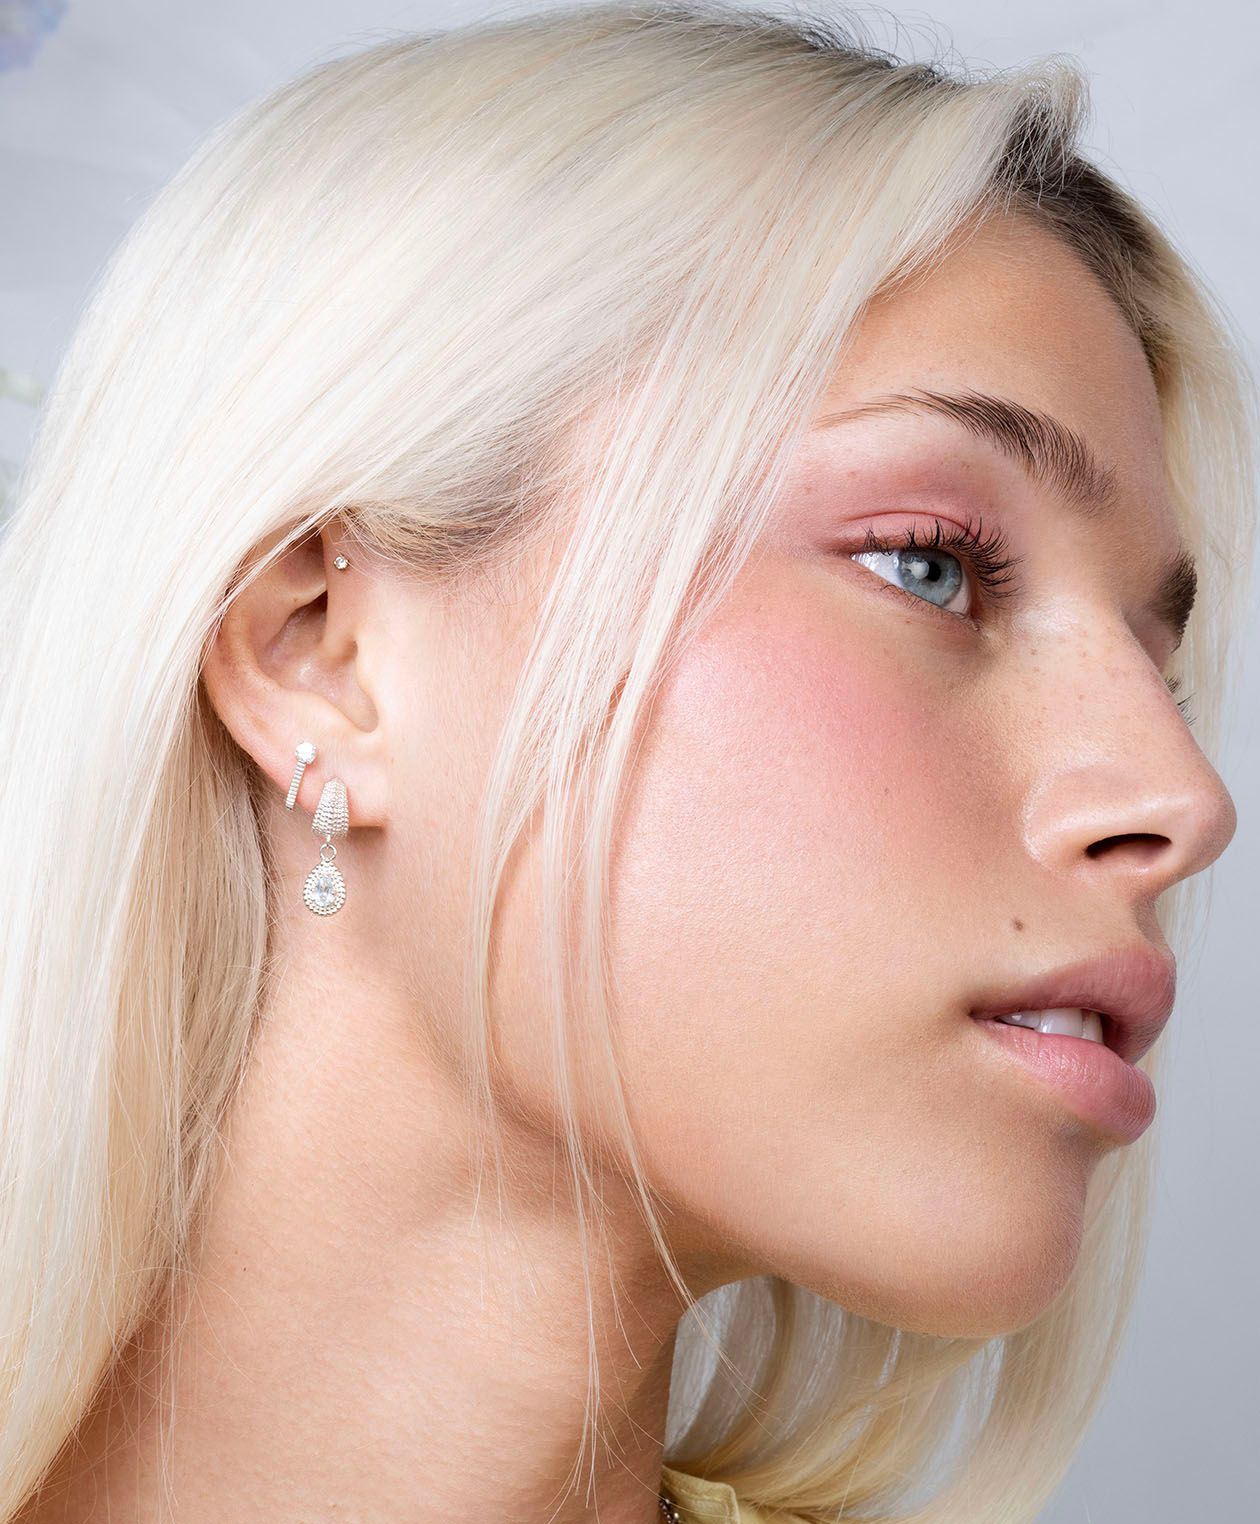 Zoe & Morgan | Althea Earrings - Silver With Aquamarine